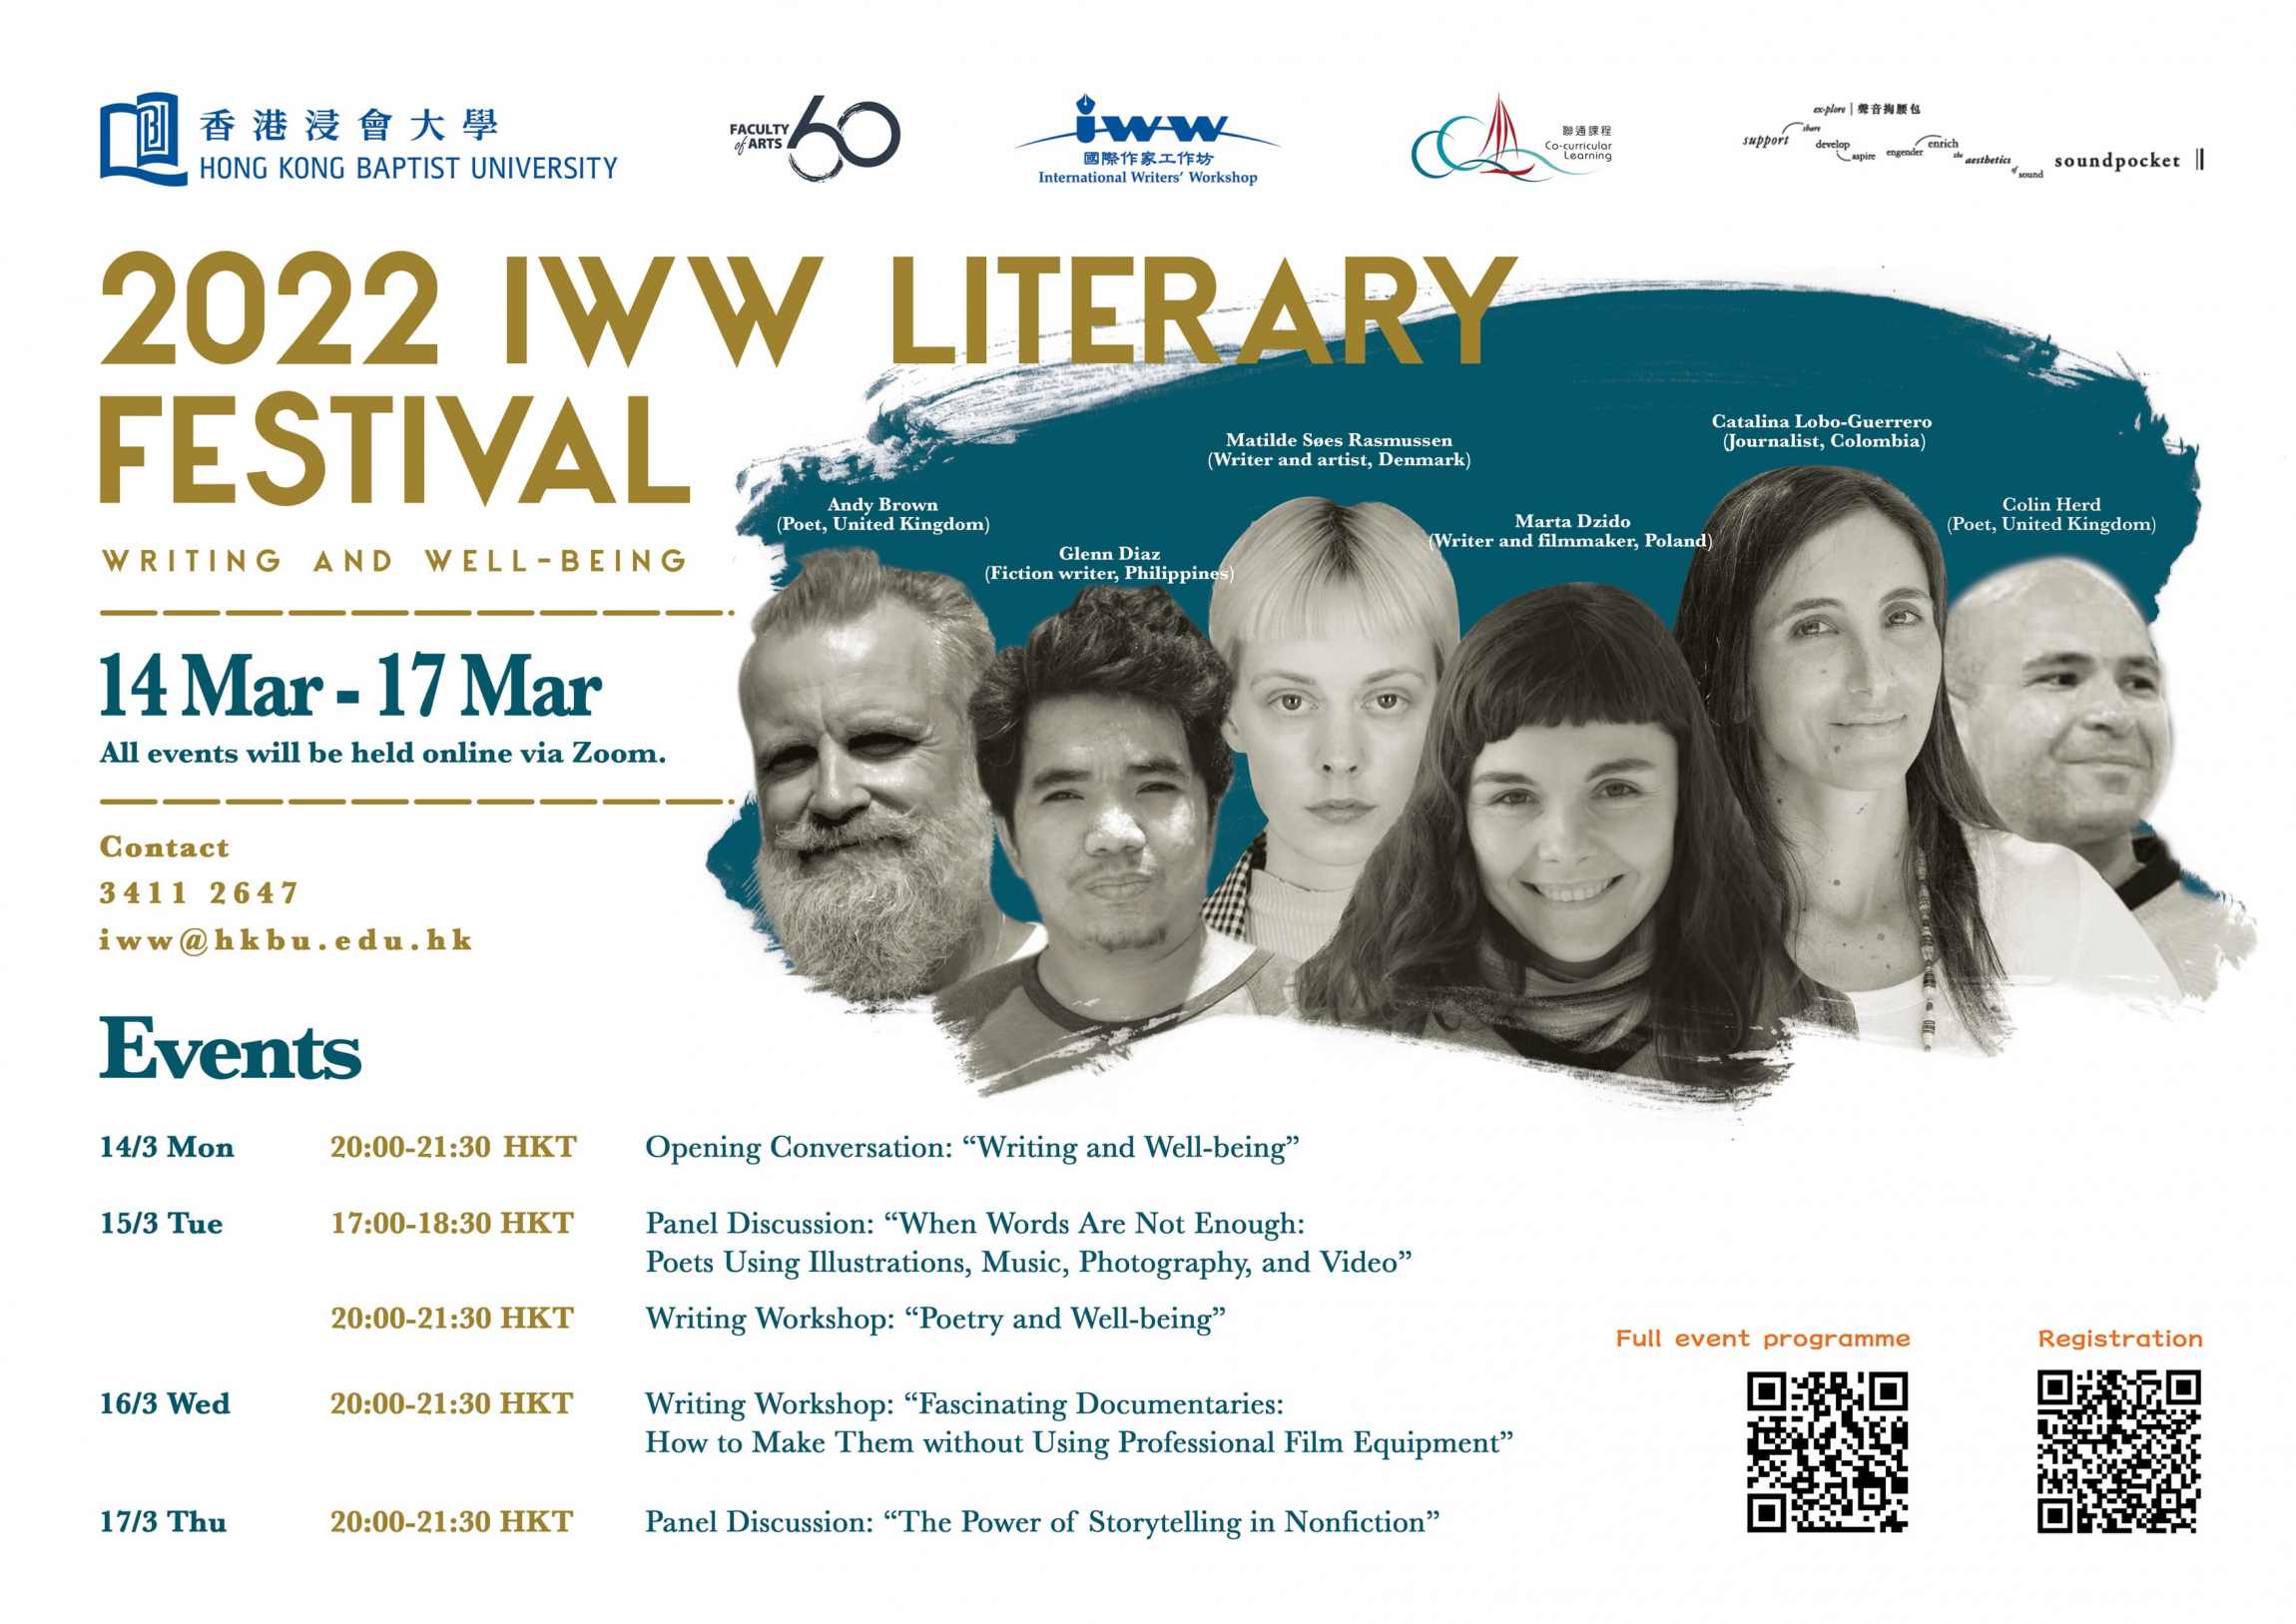 Poster of the 2022 IWW Literary Festival of HKBU